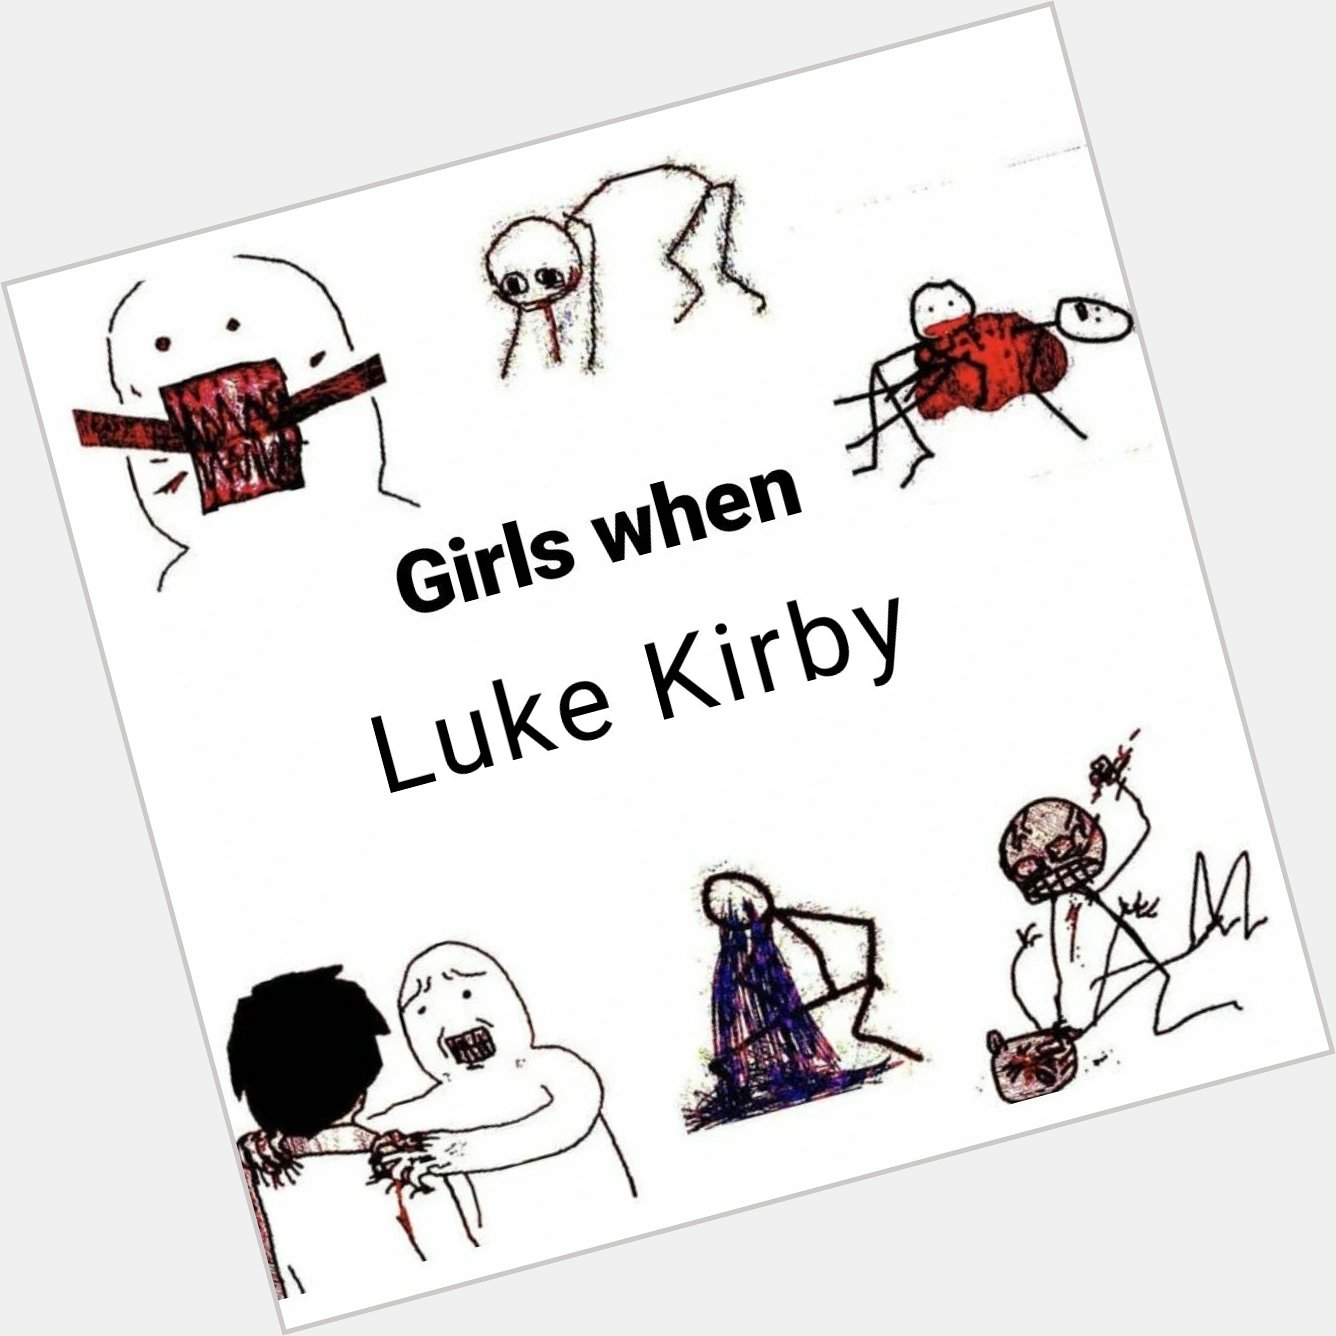 Happy Birthday Luke Kirby! 